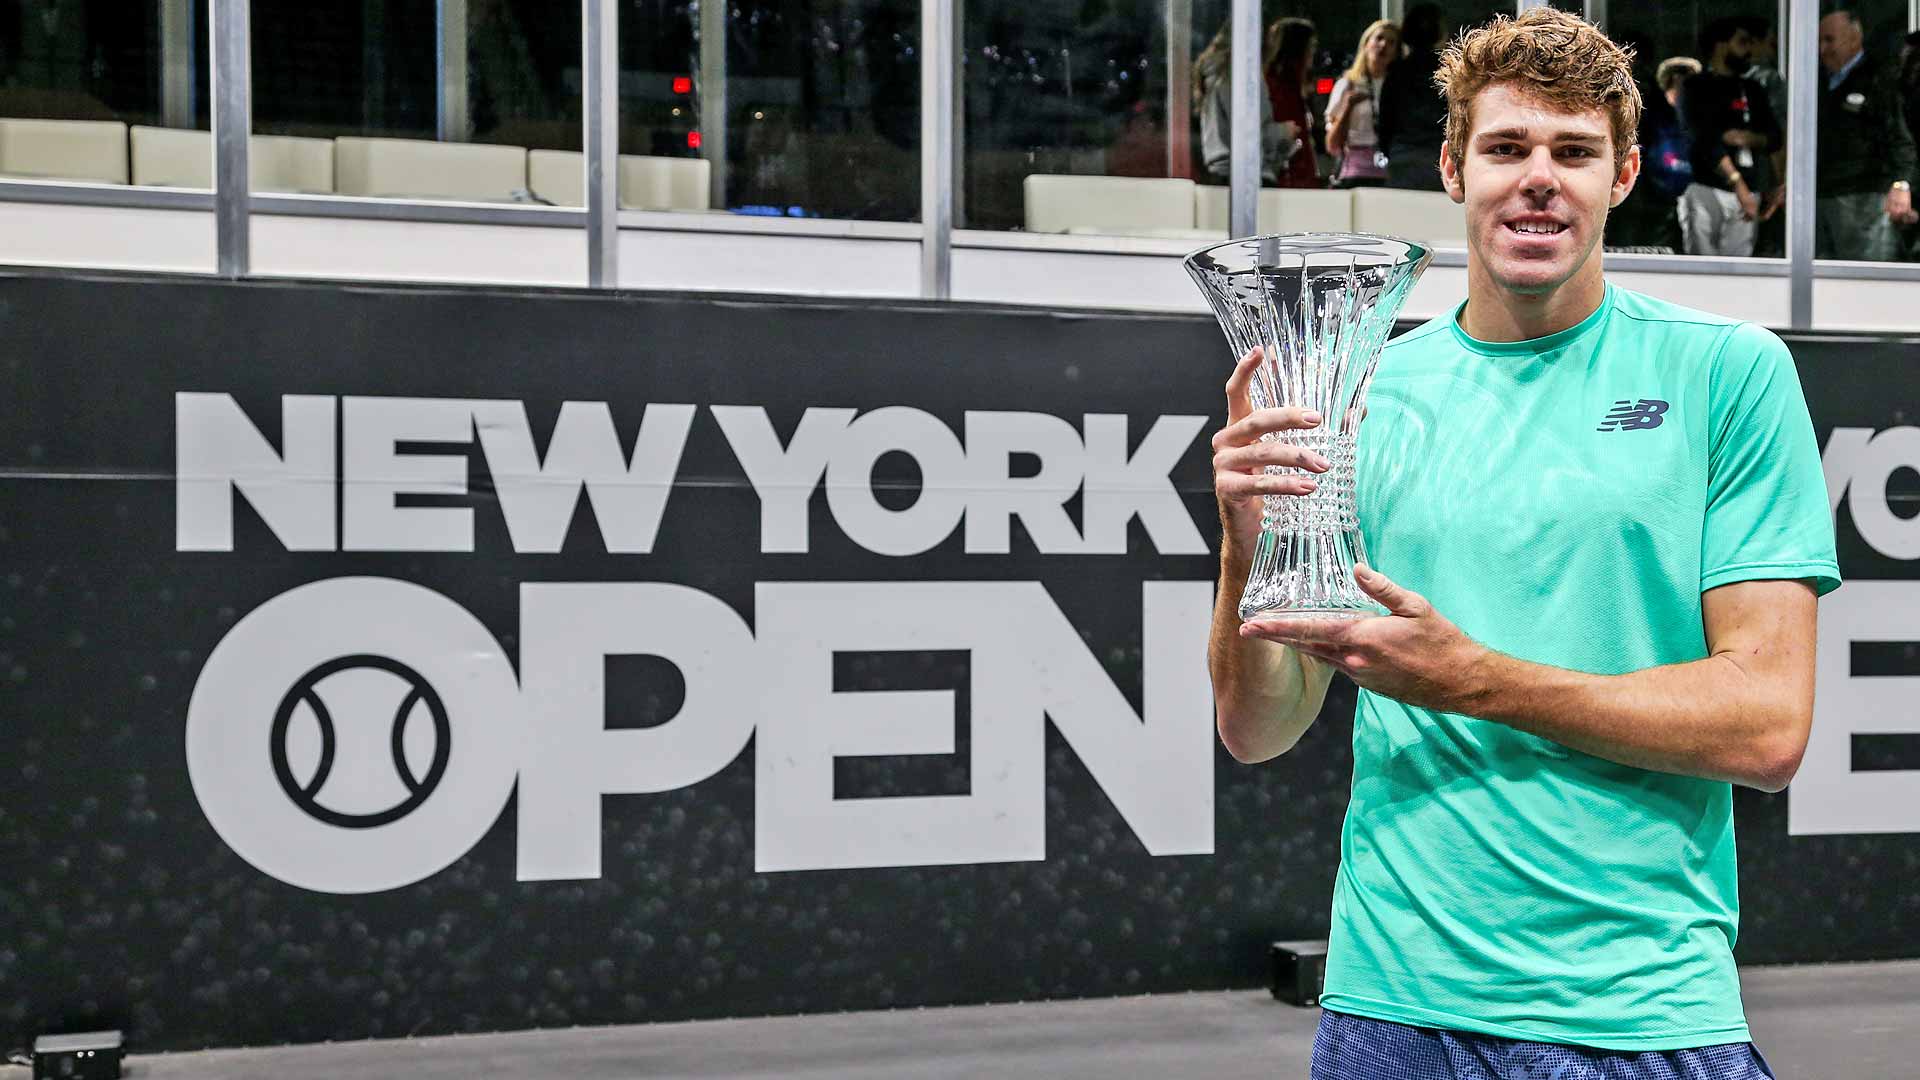 Opelka Wins 2019 New York Open